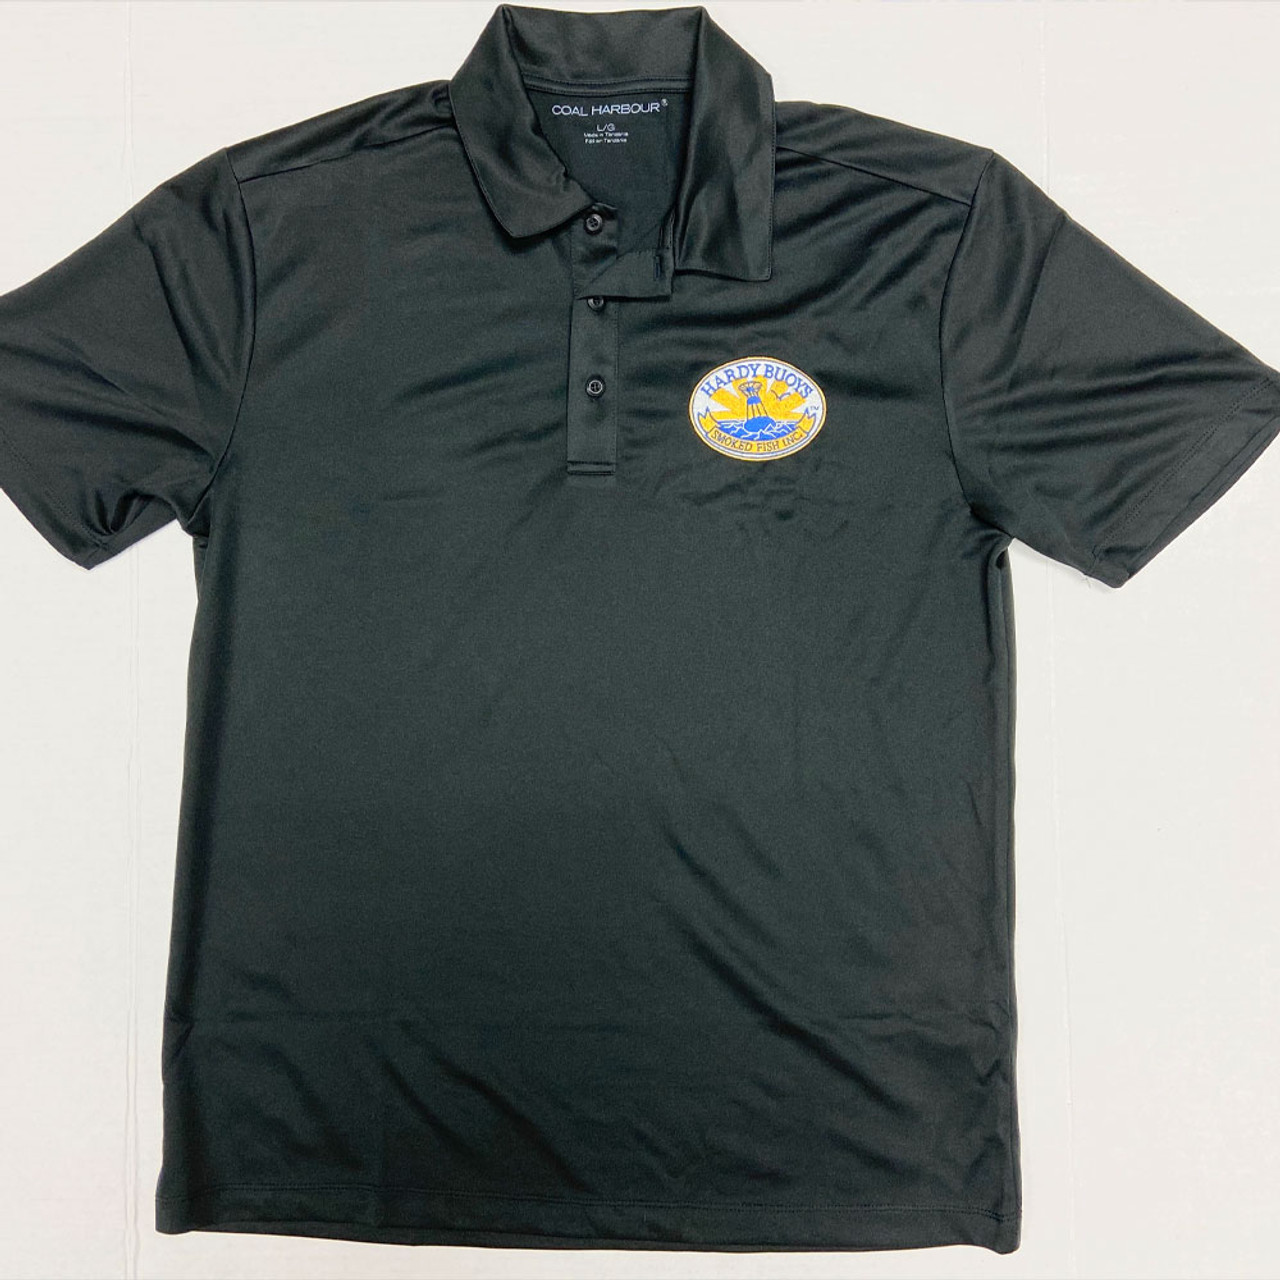 Hardy Buoys Classic Logo Golf Shirt